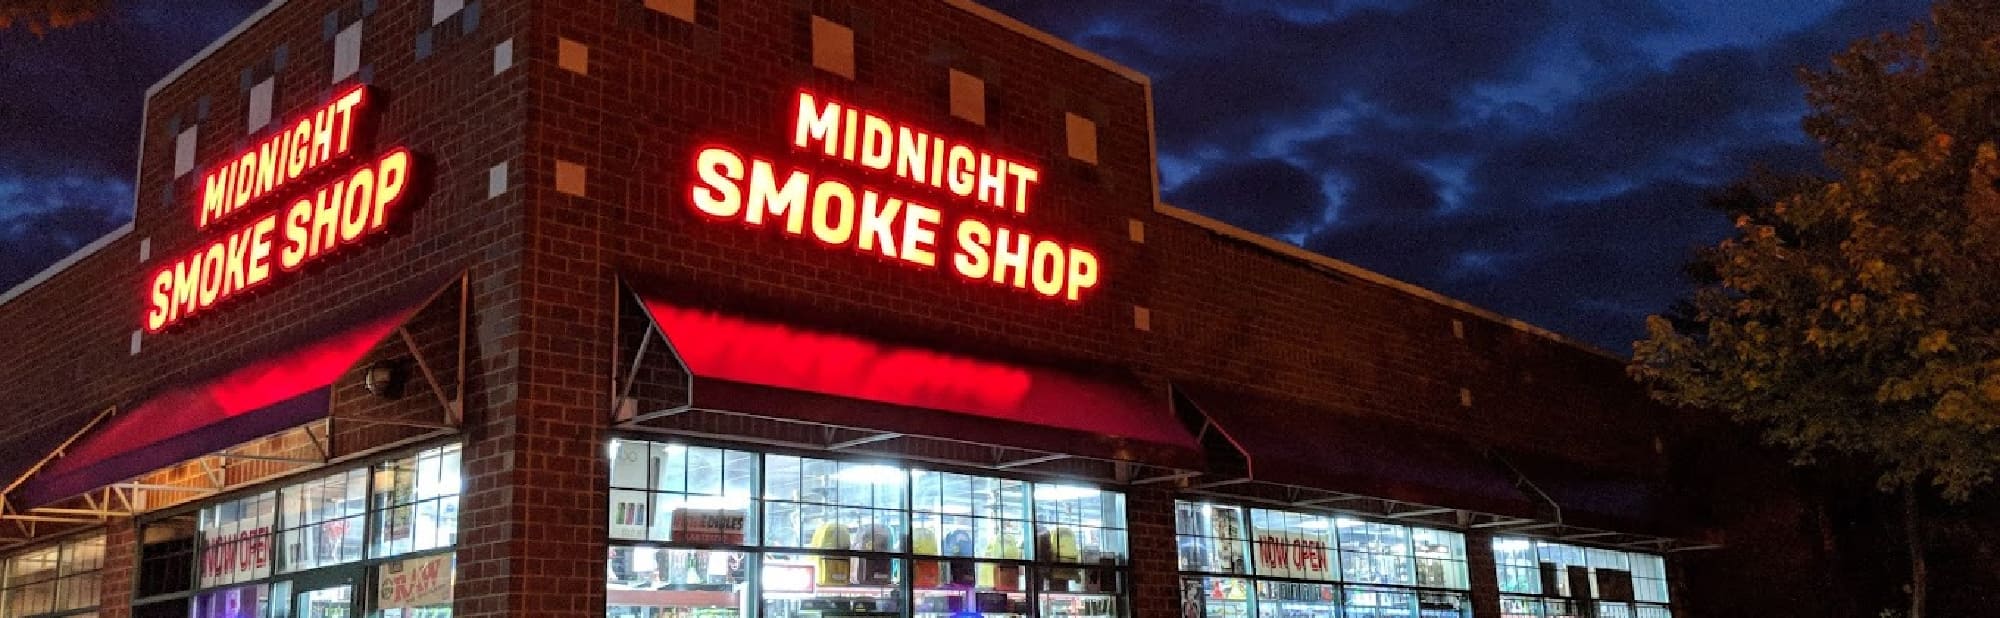 image of midnight smoke shop in chandler az